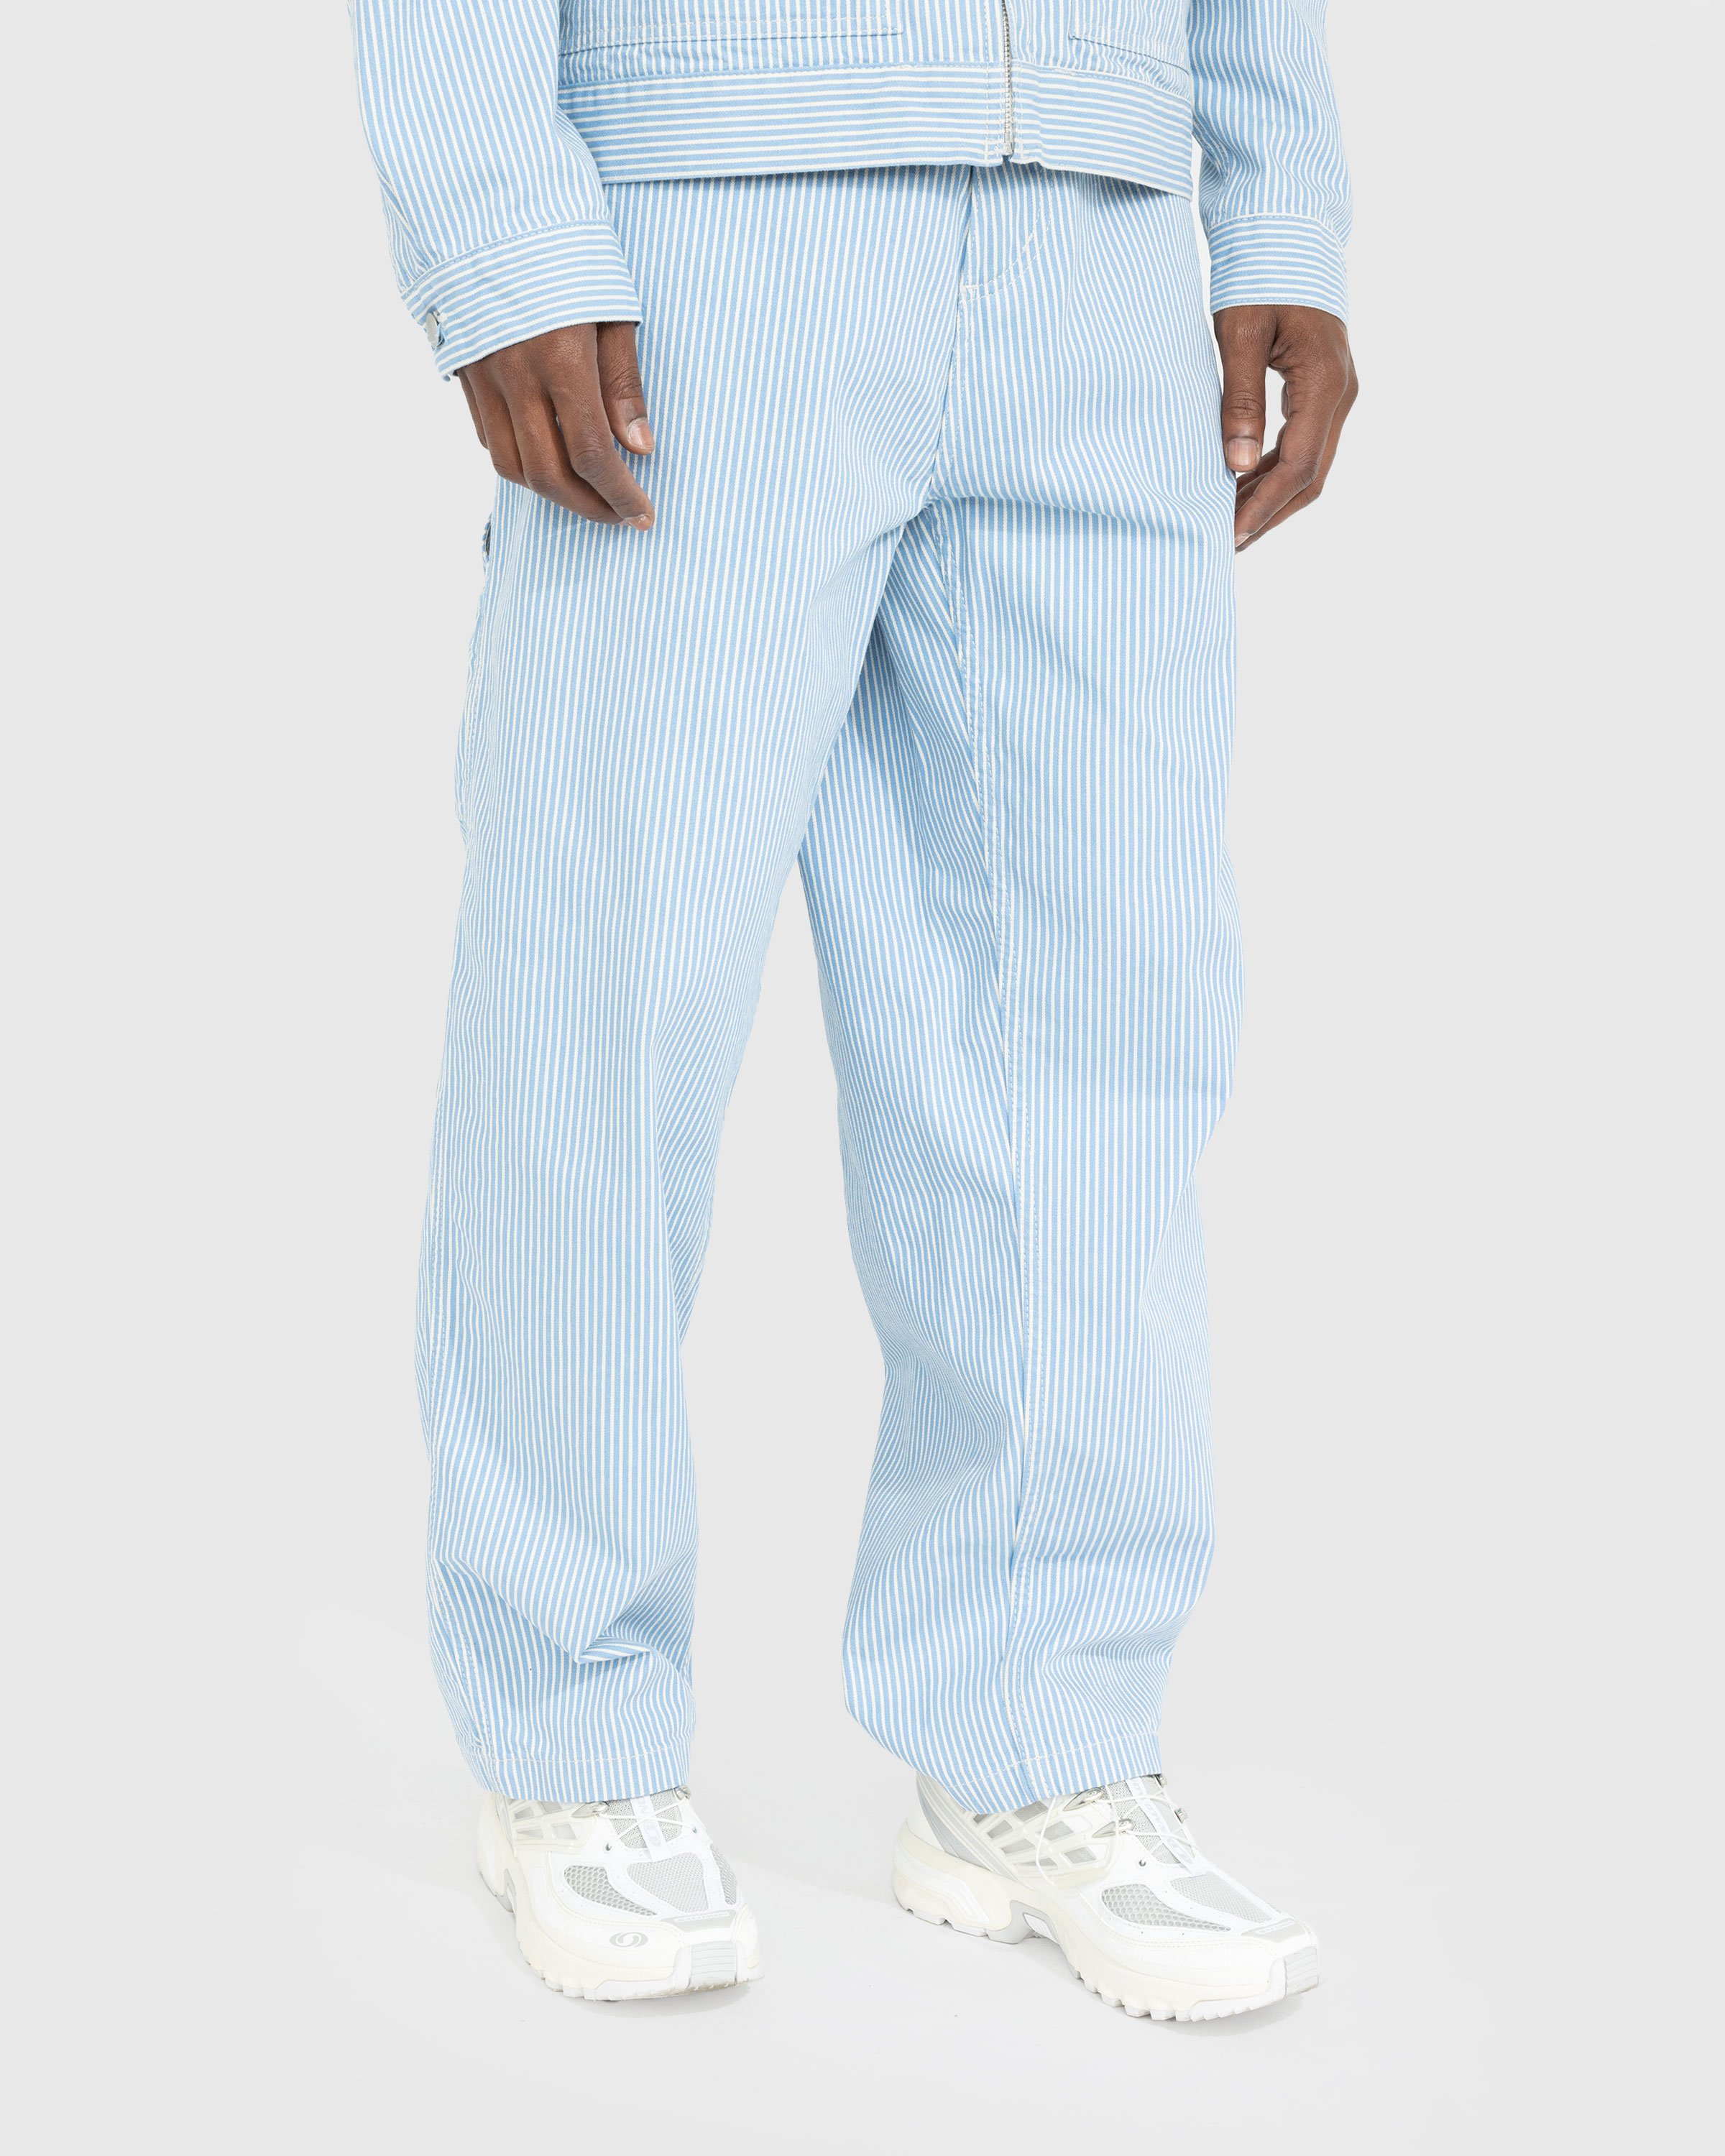 Carhartt WIP - Terrell Single Knee Pant White - Clothing - White - Image 2